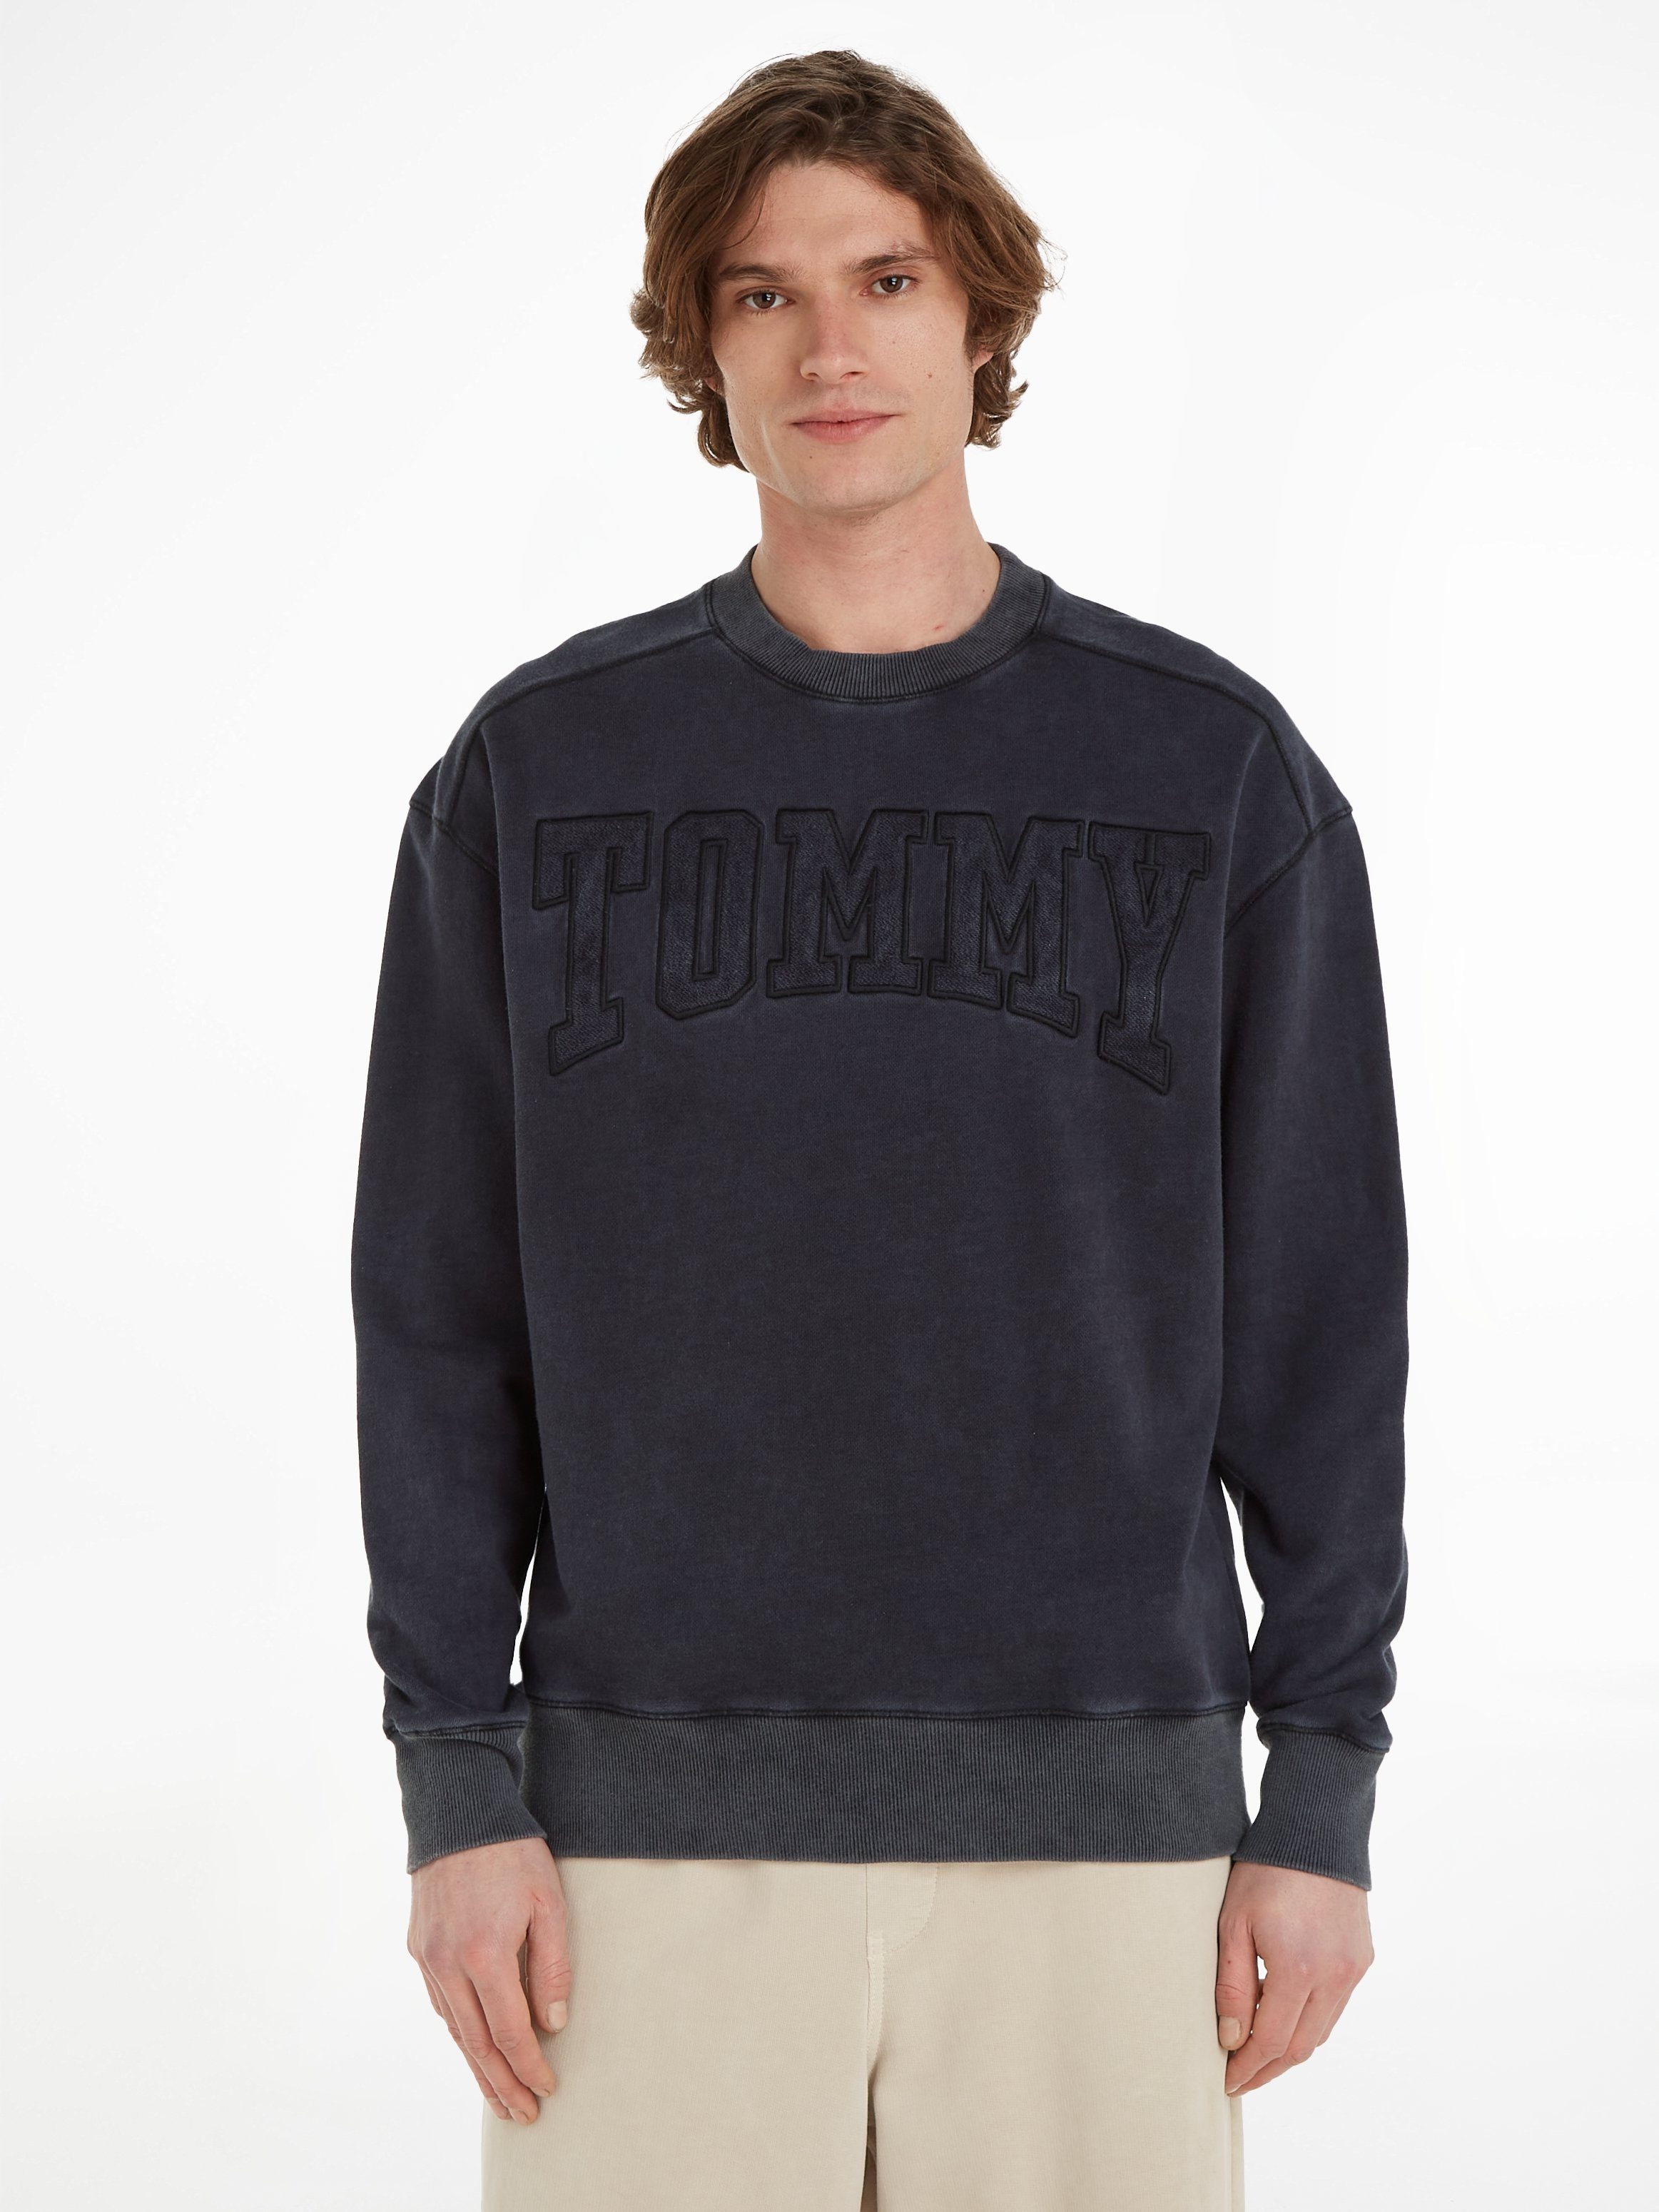 WASH NEW VRSTY ACID Jeans TJM CREW Tommy RLX Sweatshirt